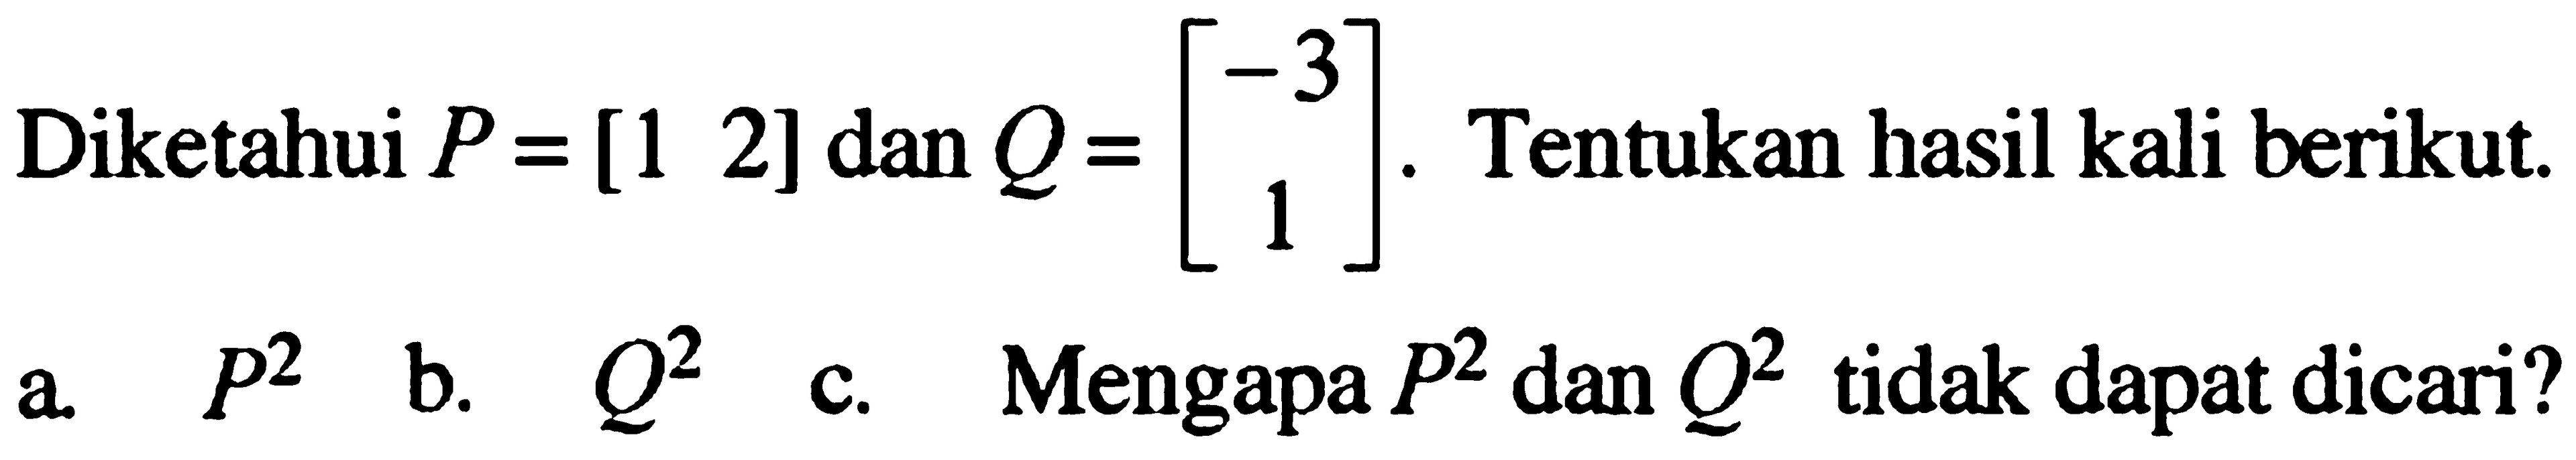 Diketahui P=[1 2] dan Q=[-3 1]/ Tentukan hasil kali berikut. a. P^2 b. Q^2 c. Mengapa P^2 dan Q^2 tidak dapat dicari?